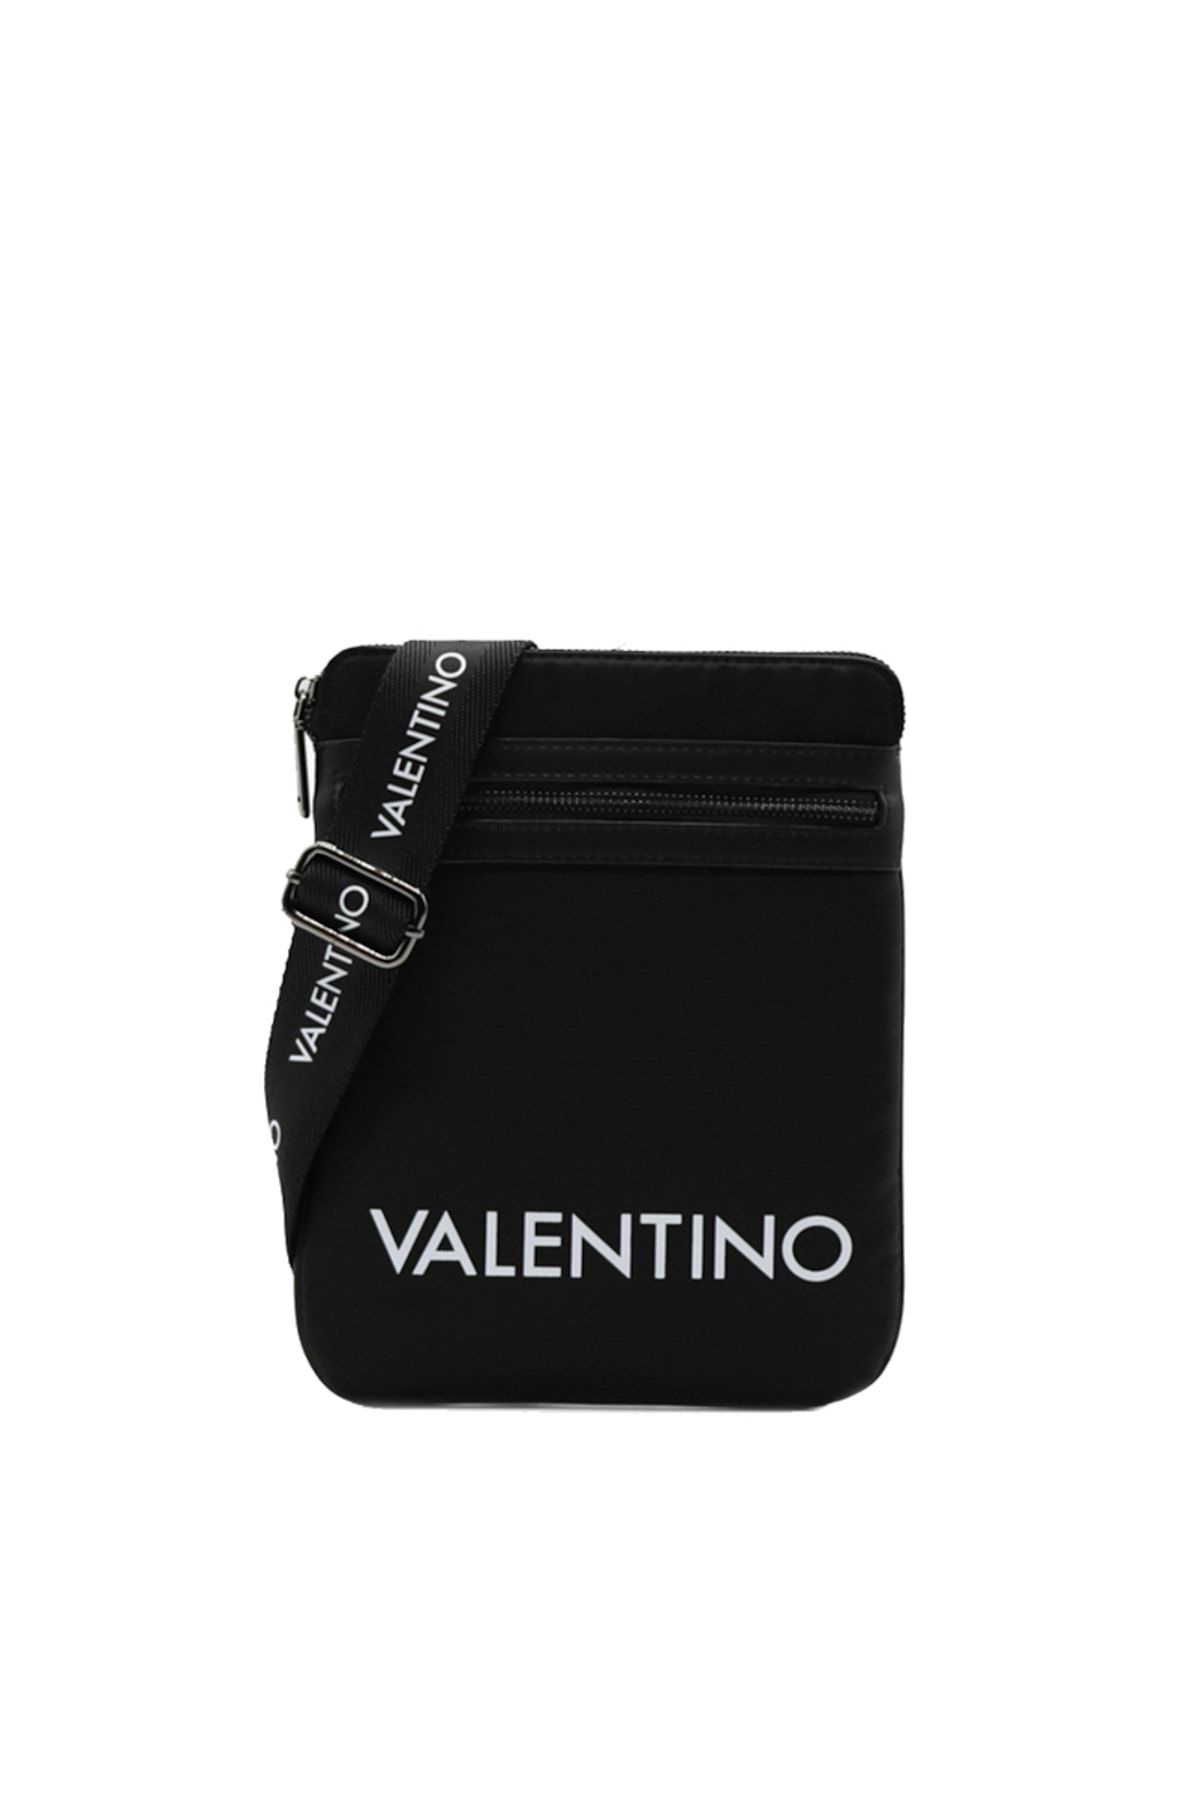 Mario Valentino Backpack - Black - Slogan - Trendyol